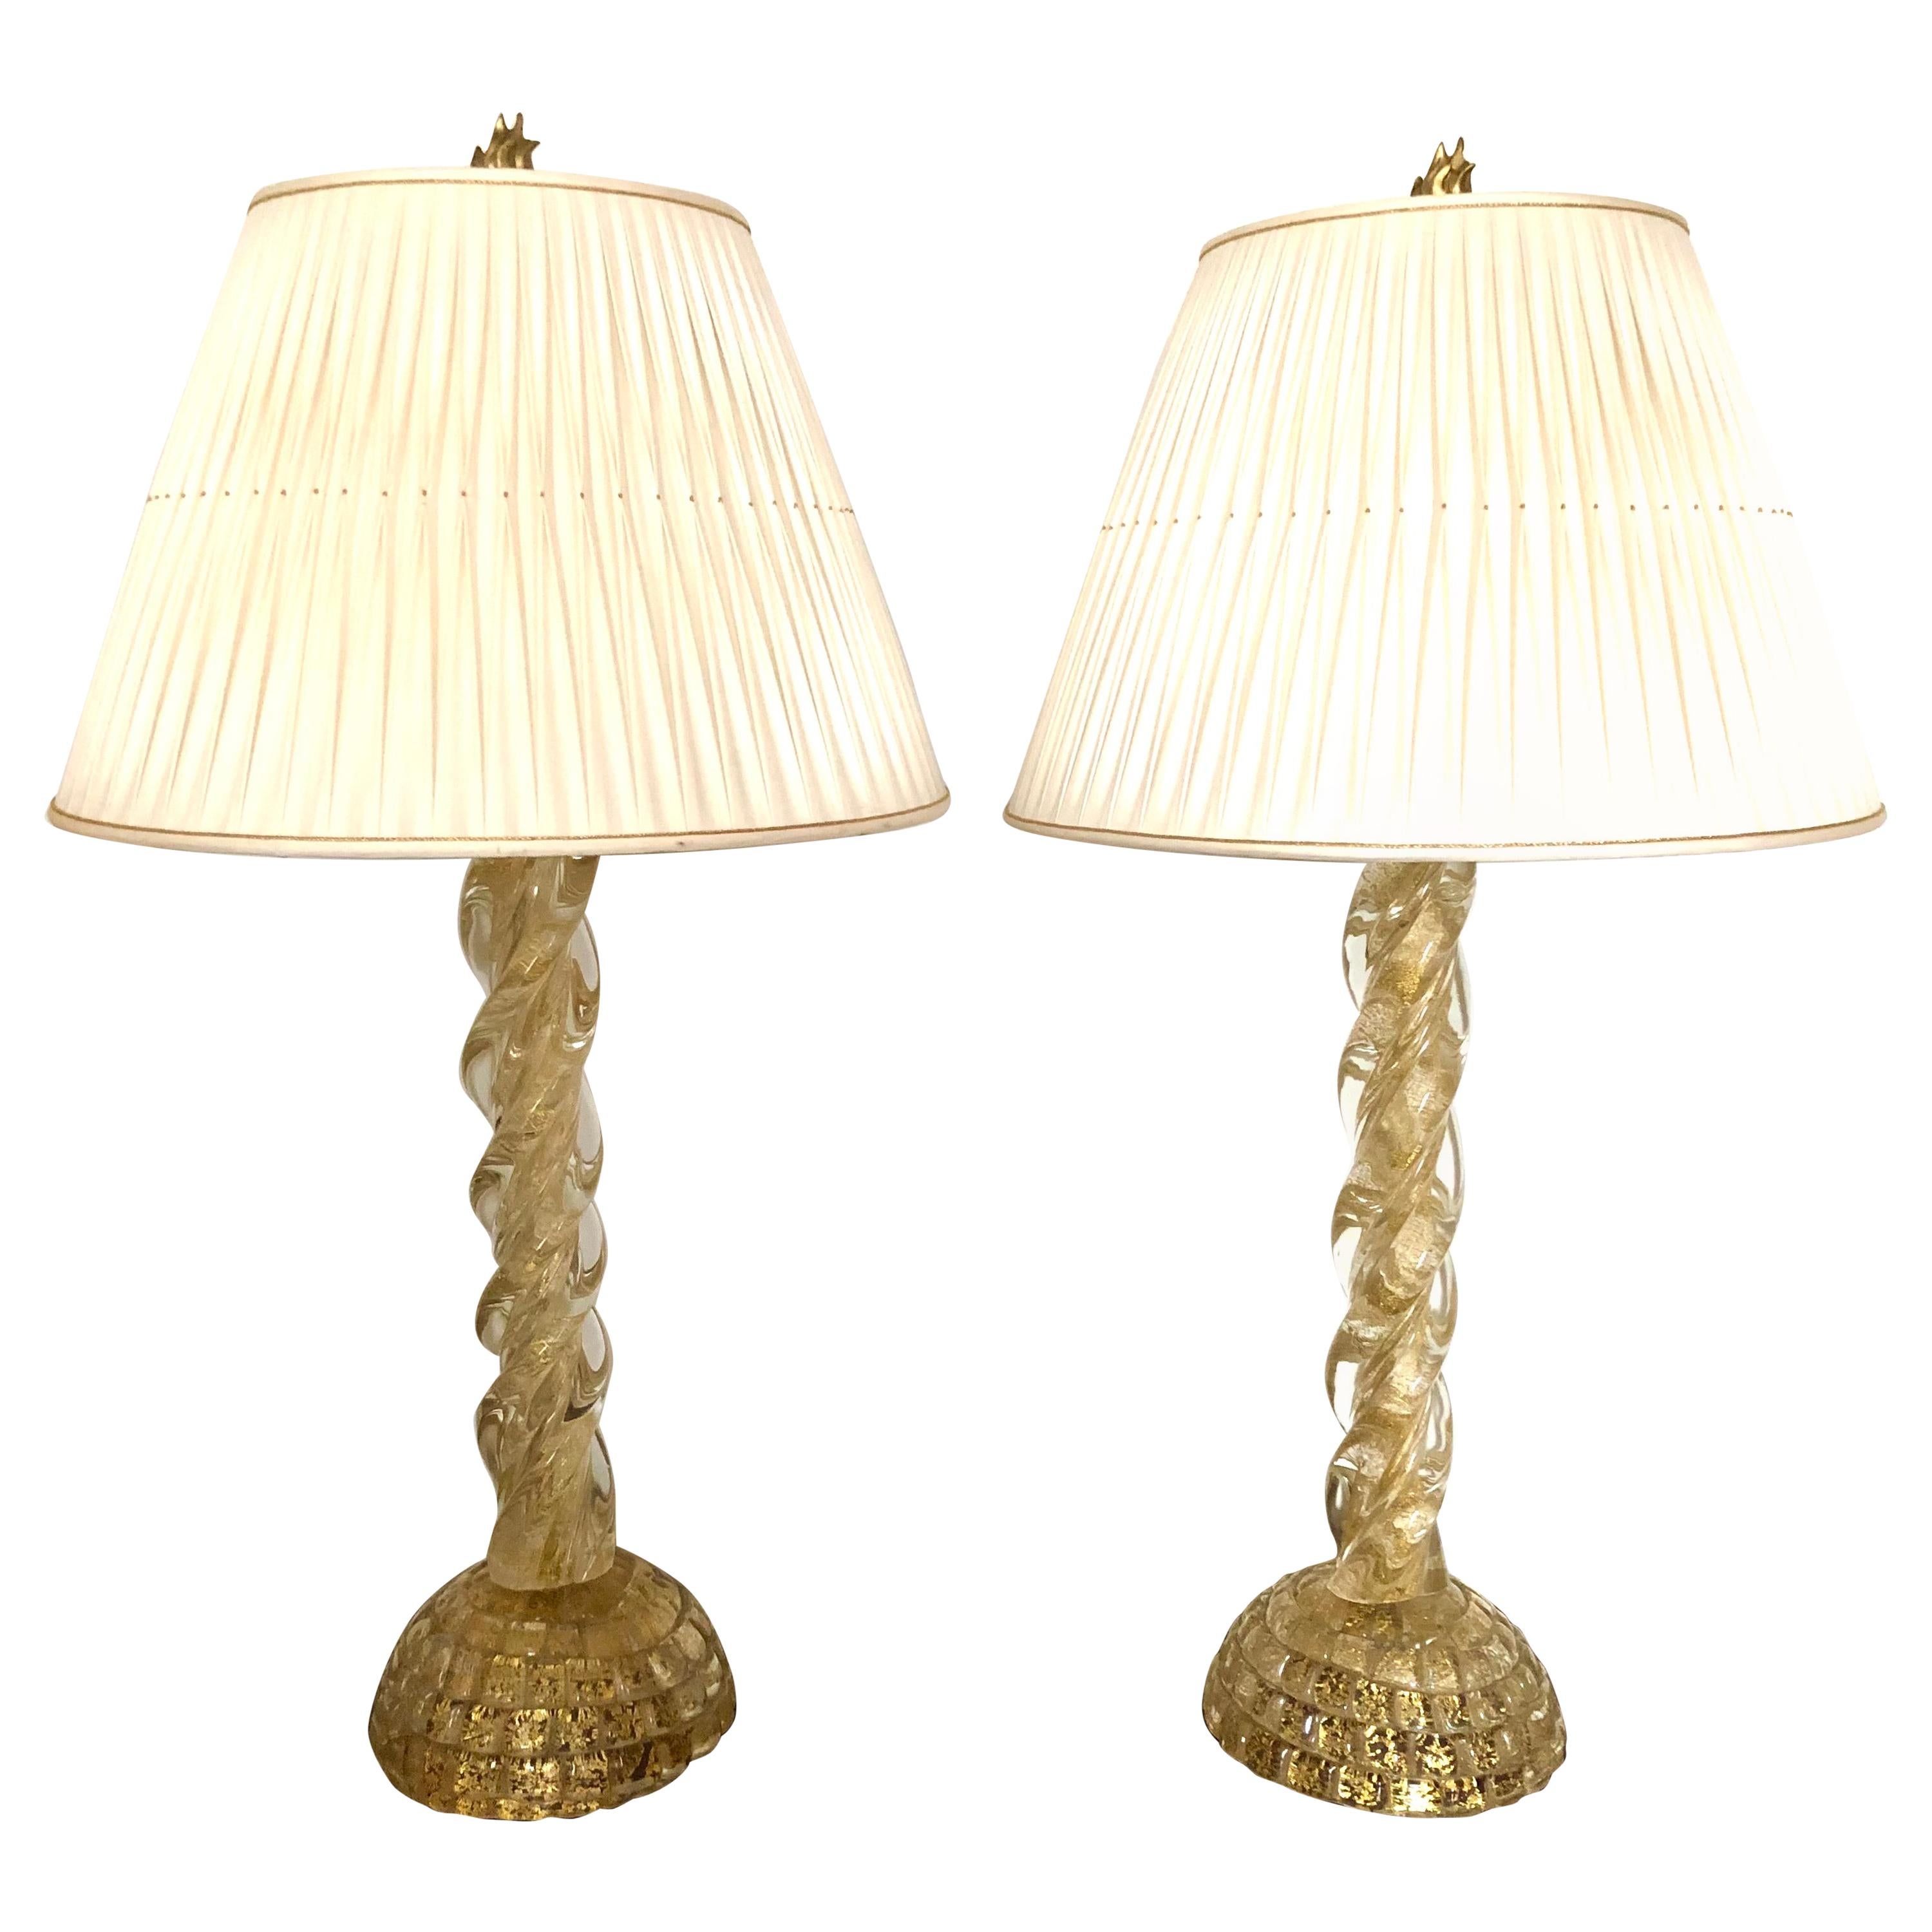 Ercole Barovier, Pair Massive Murano Glass Table Lamps